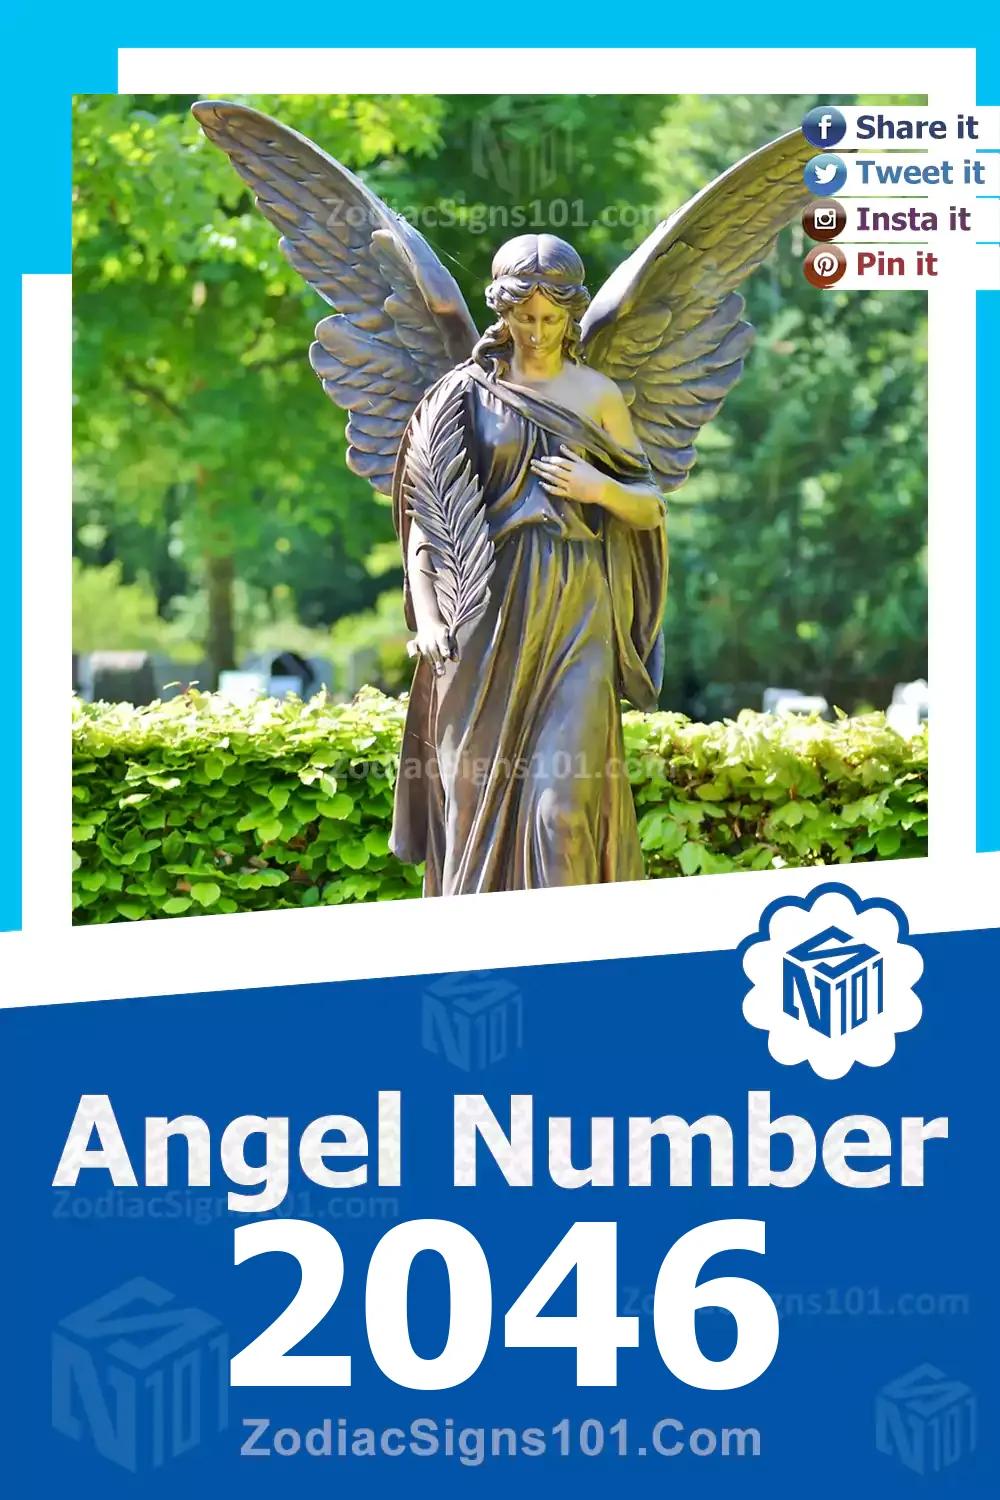 2046-Angel-Number-Meaning.jpg